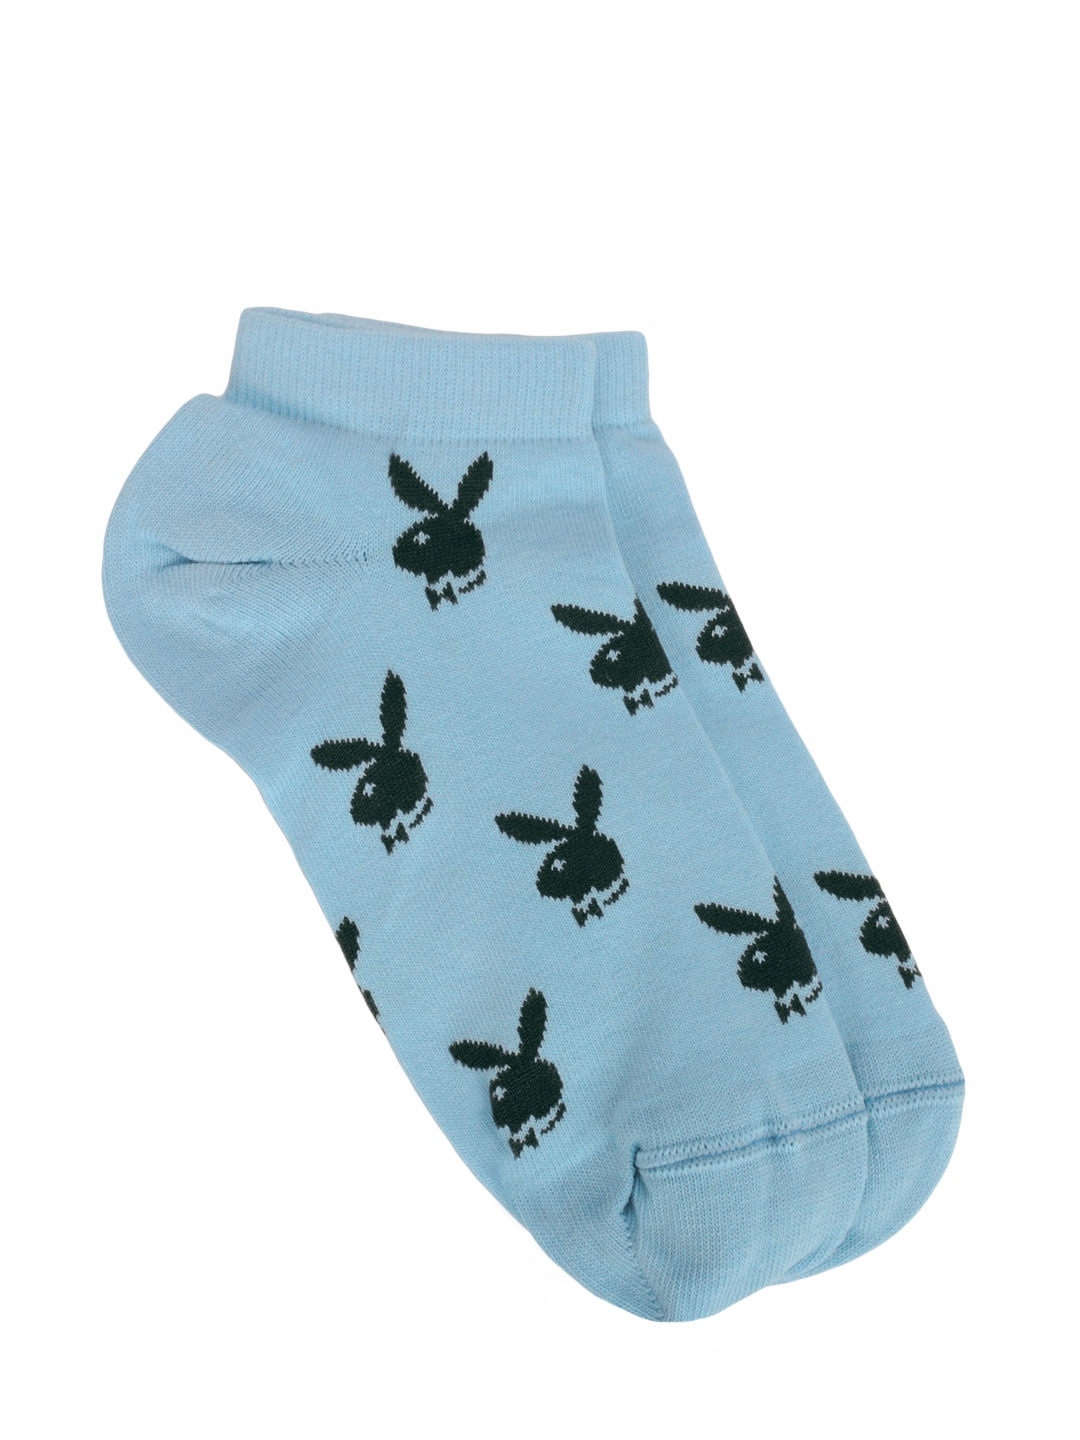 Playboy Women Blue Socks